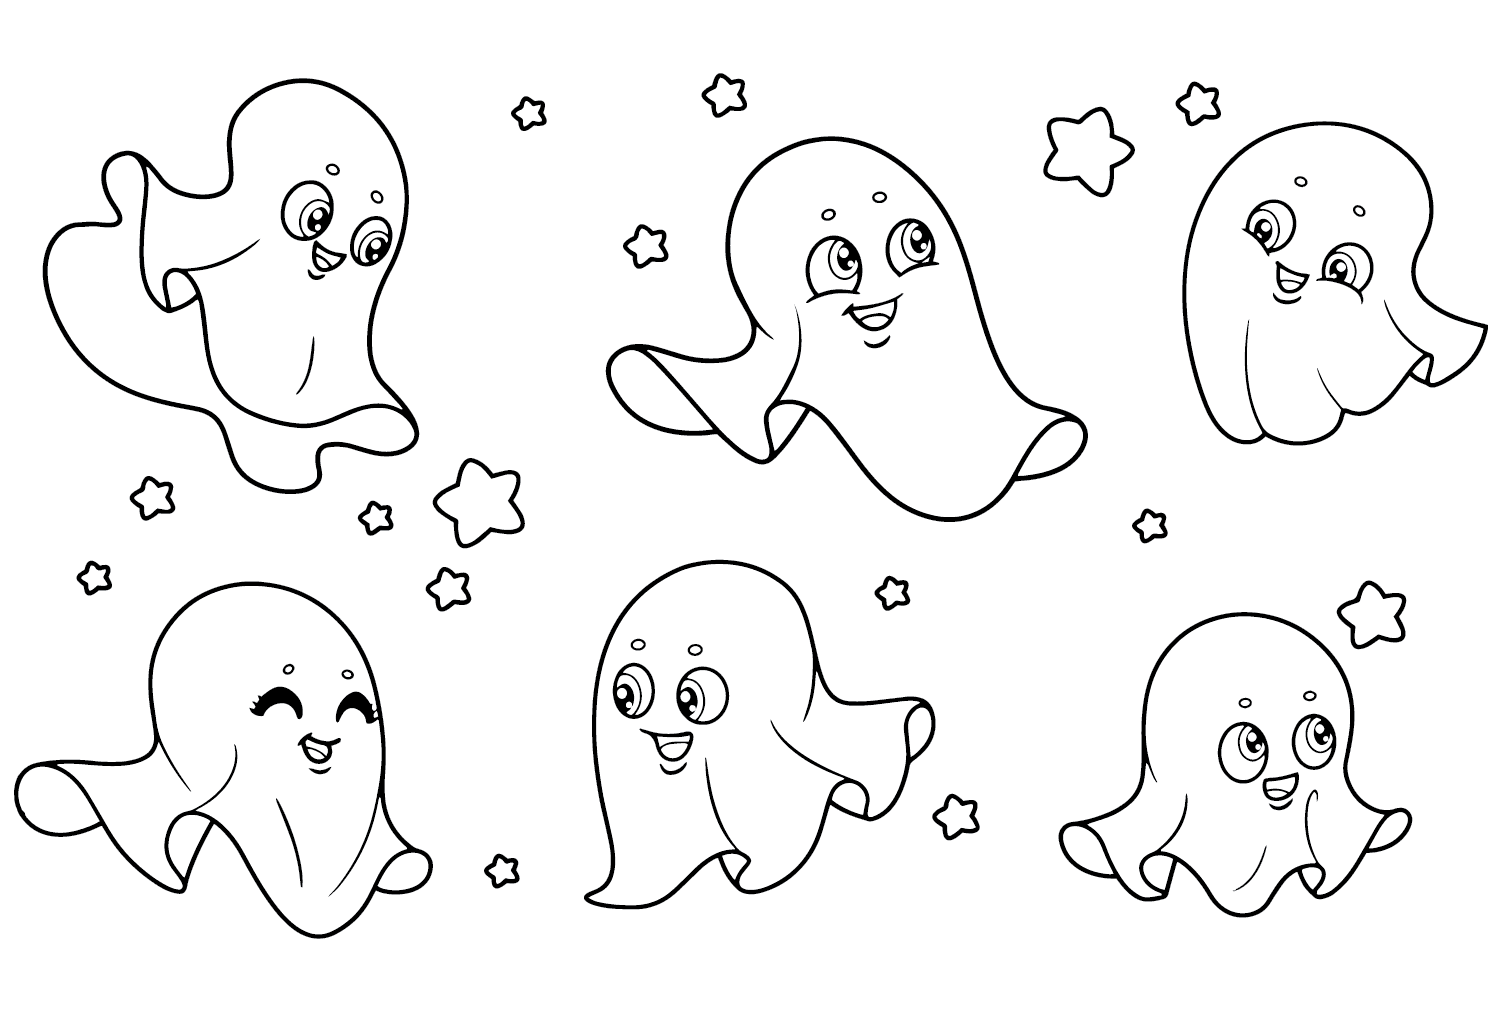 Página para colorir de fantasma fofo do Ghost